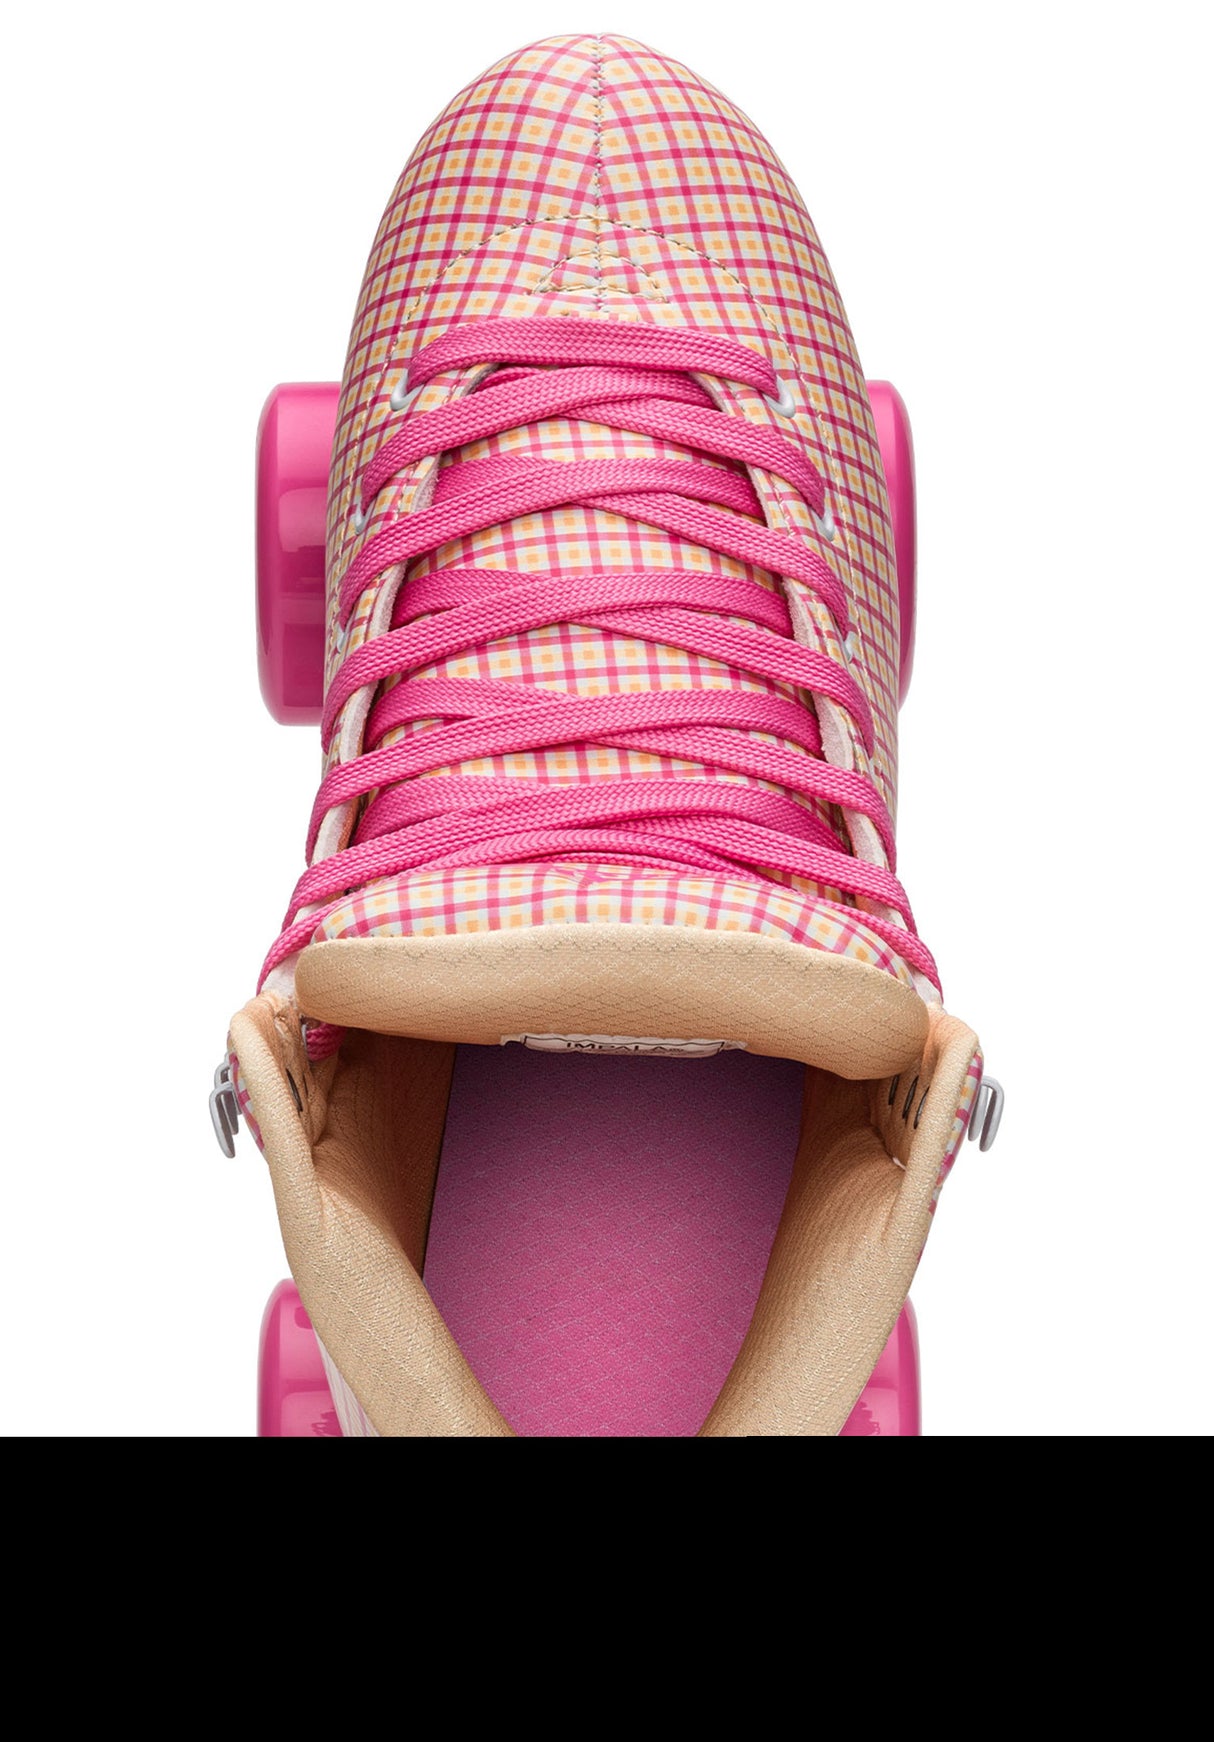 Quad Rollschuhe / Rollerskates pink-tartan Close-Up2